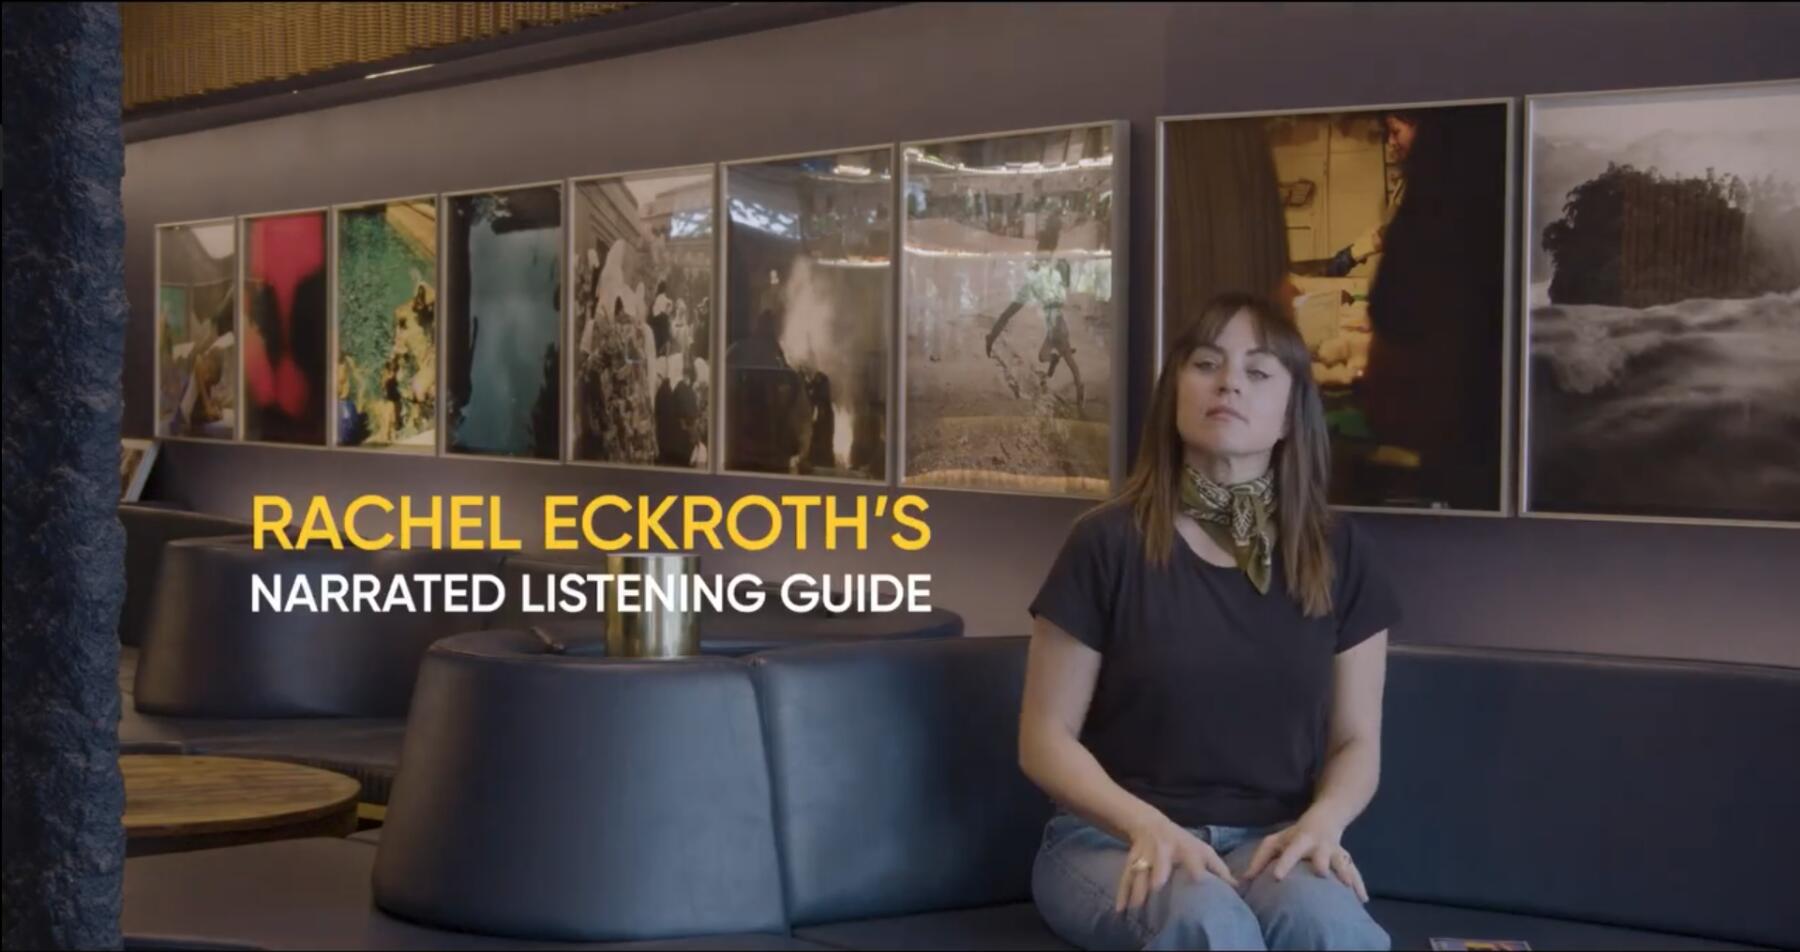 Rachel Eckroth's Narrated Listening Guide